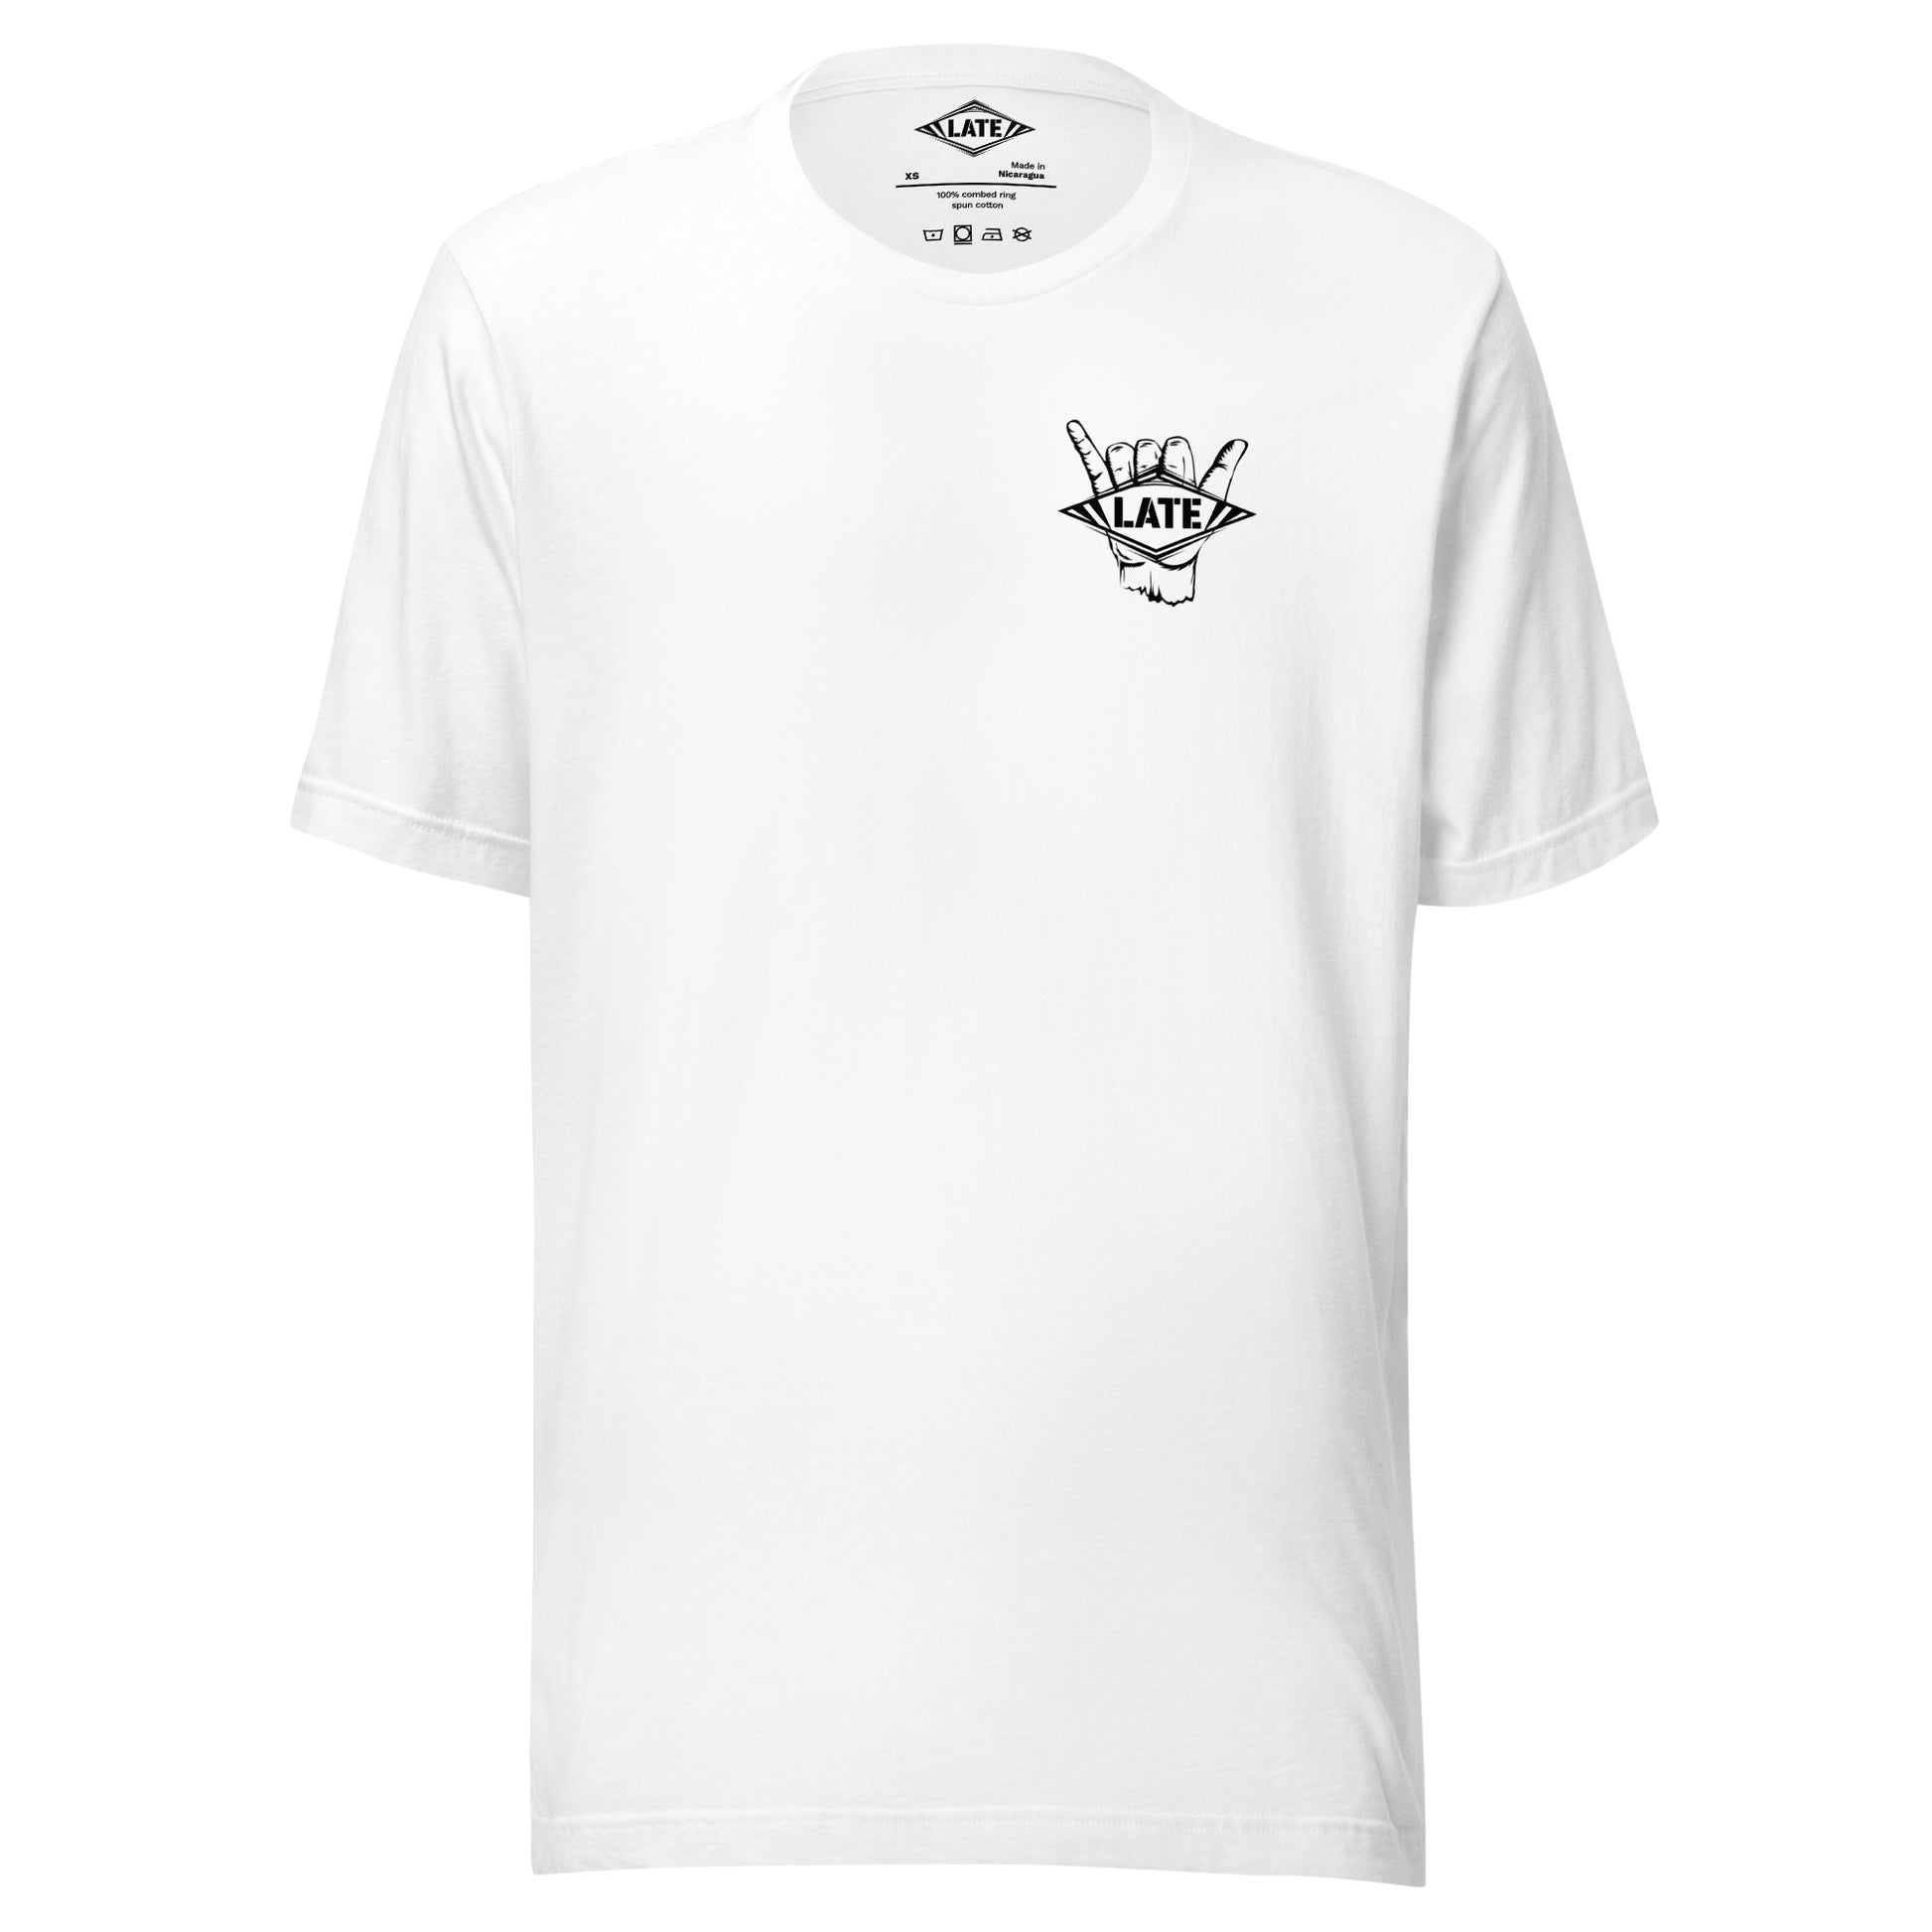 T-Shirt surfing main shaka avec le logo Late face avant t-shirt unisex couleur blanc